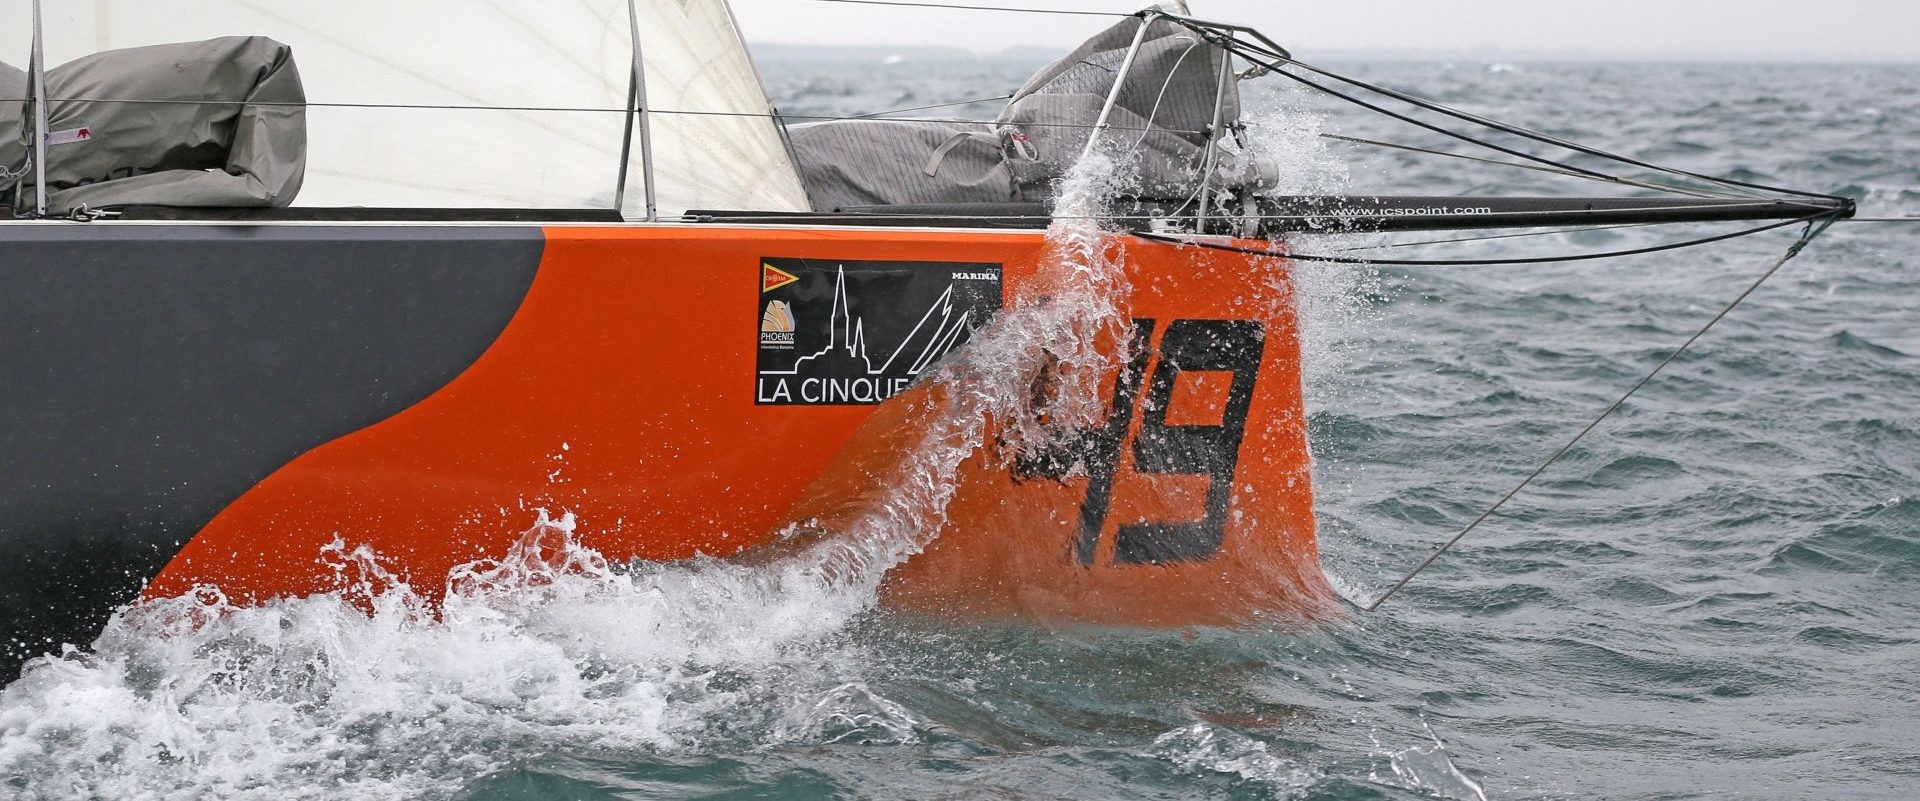 Offshore Race - La Cinquecento